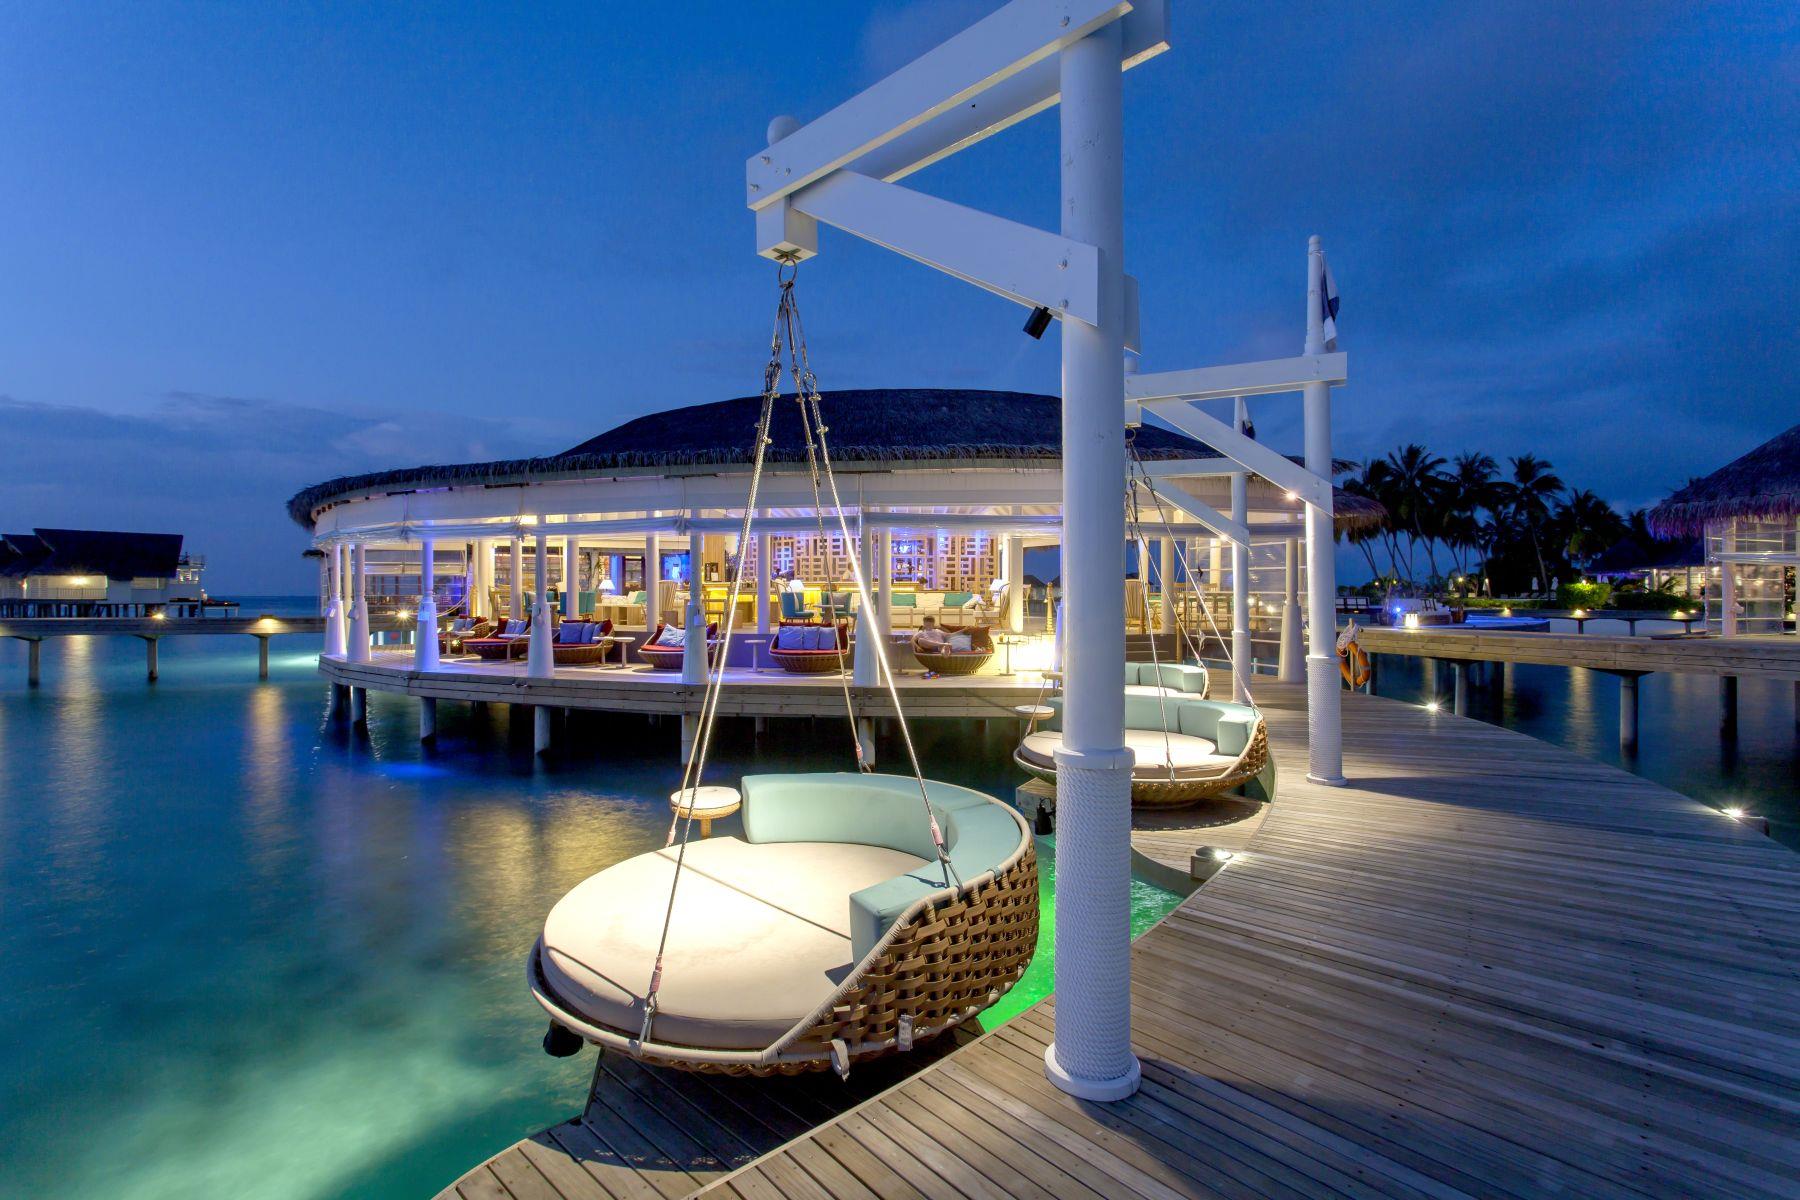 Centara grand island resort. Centara Grand Island. Centara Grand Island Resort & Spa. Centara Grand Maldives. Centara Grand Island Resort & Spa 4*.